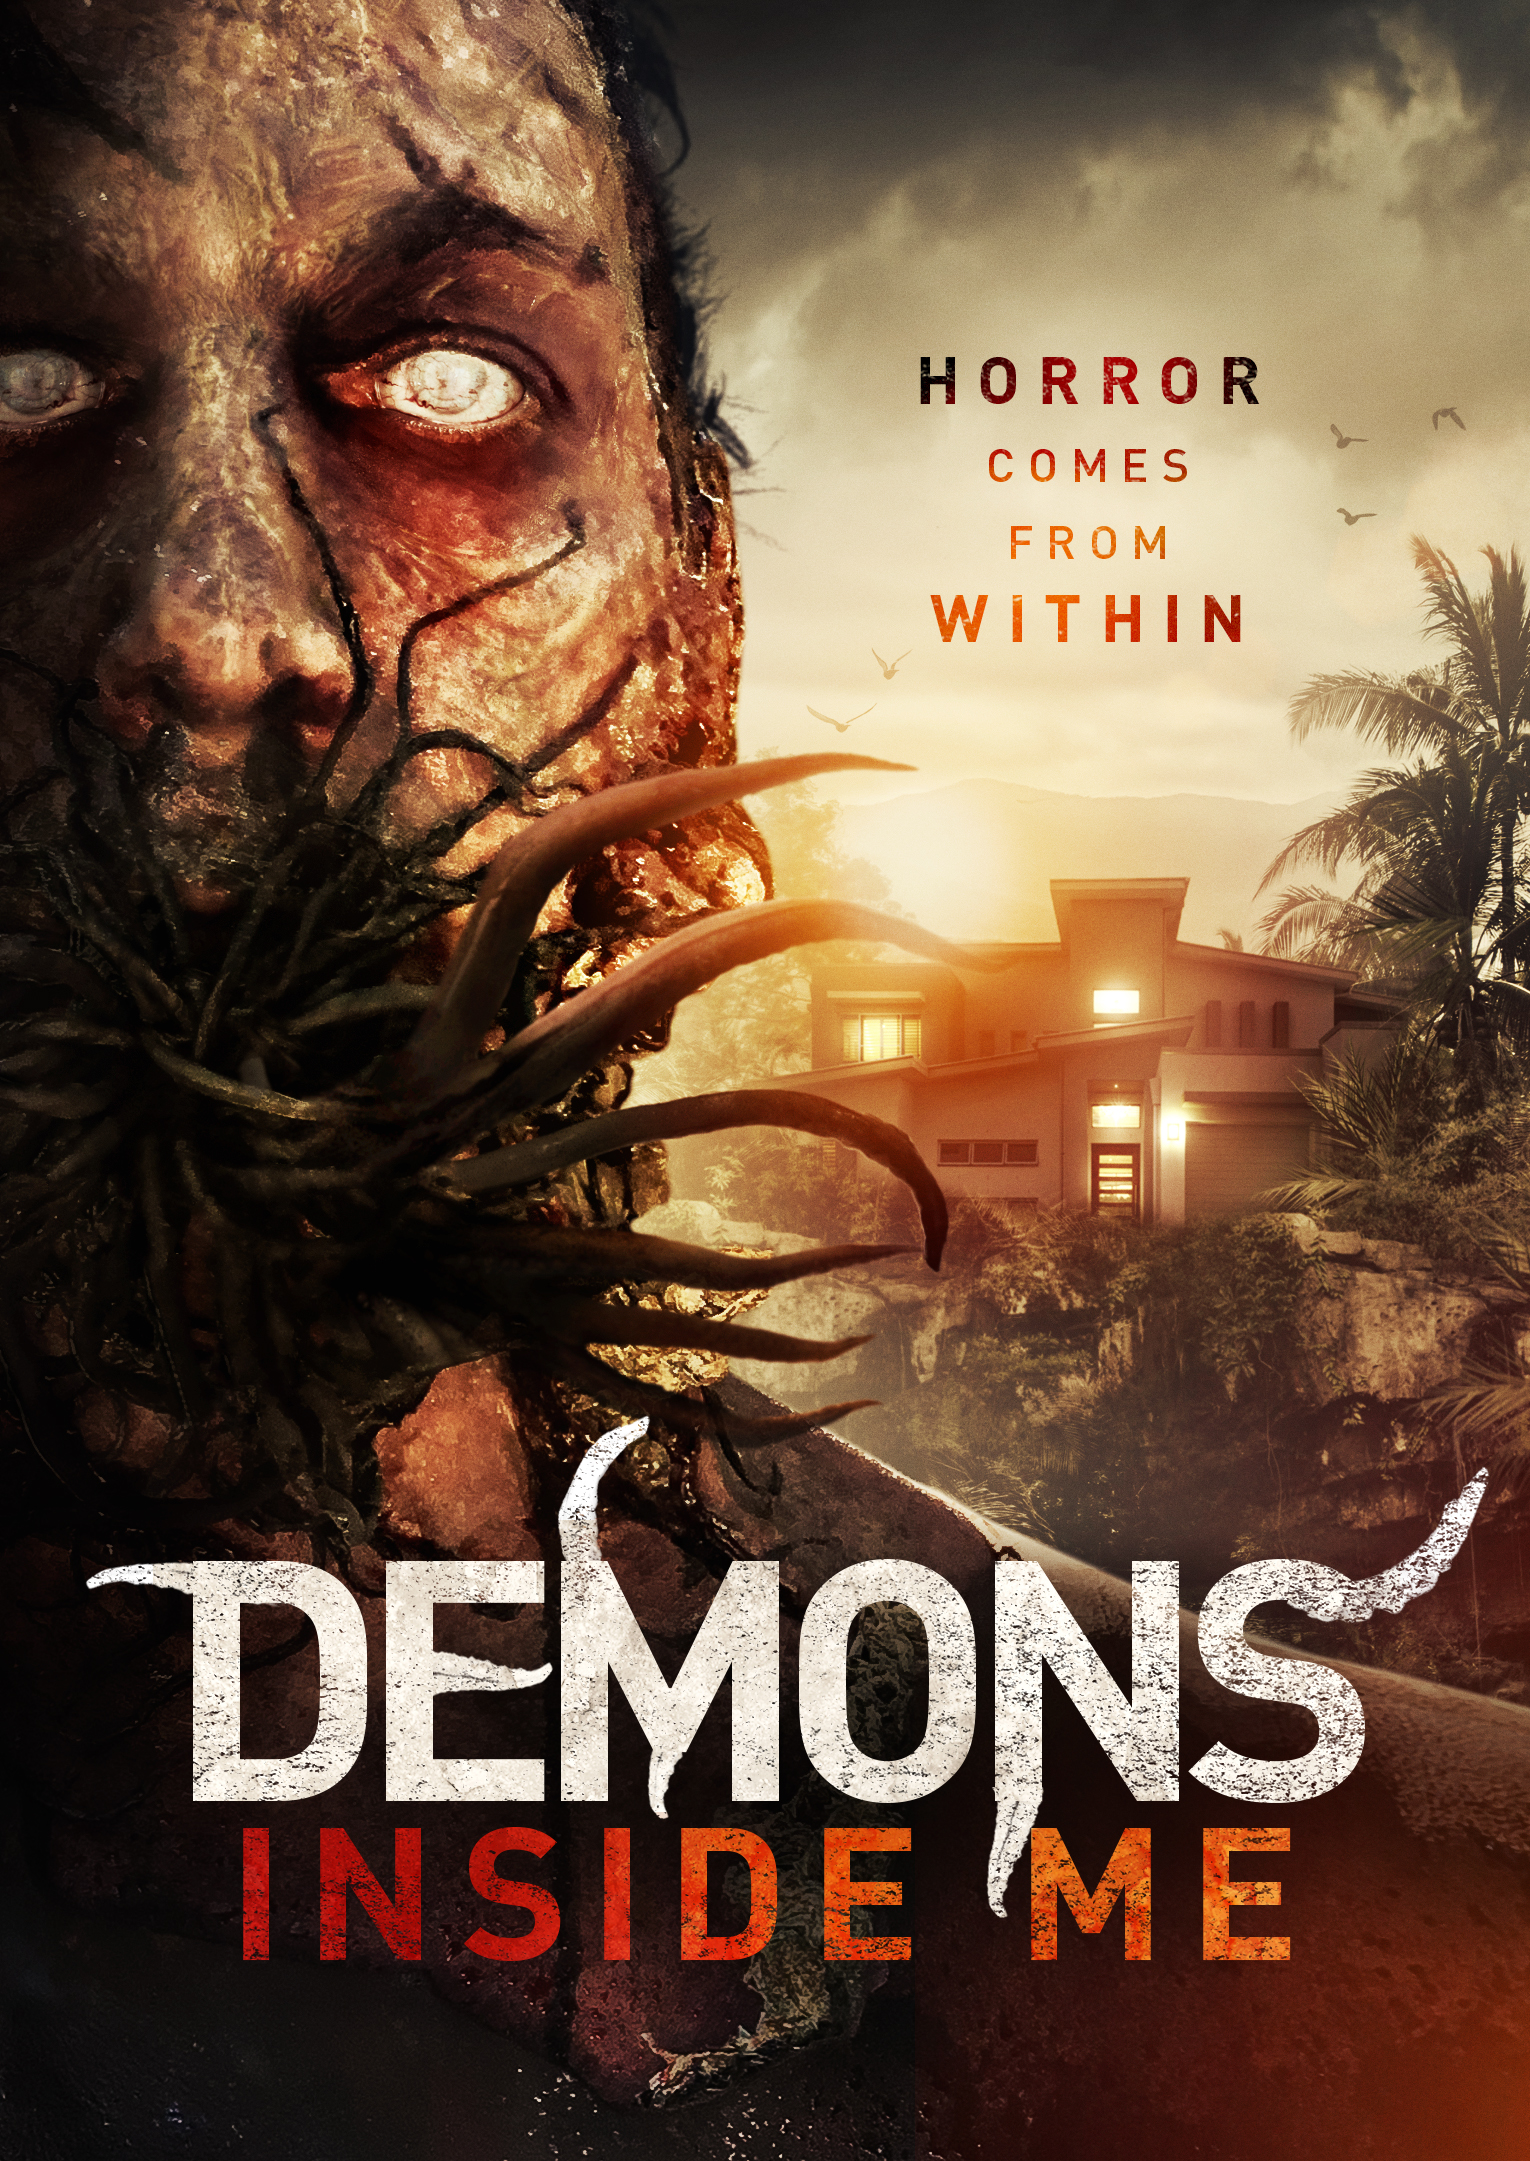 Nonton film Demons Inside Me layarkaca21 indoxx1 ganool online streaming terbaru